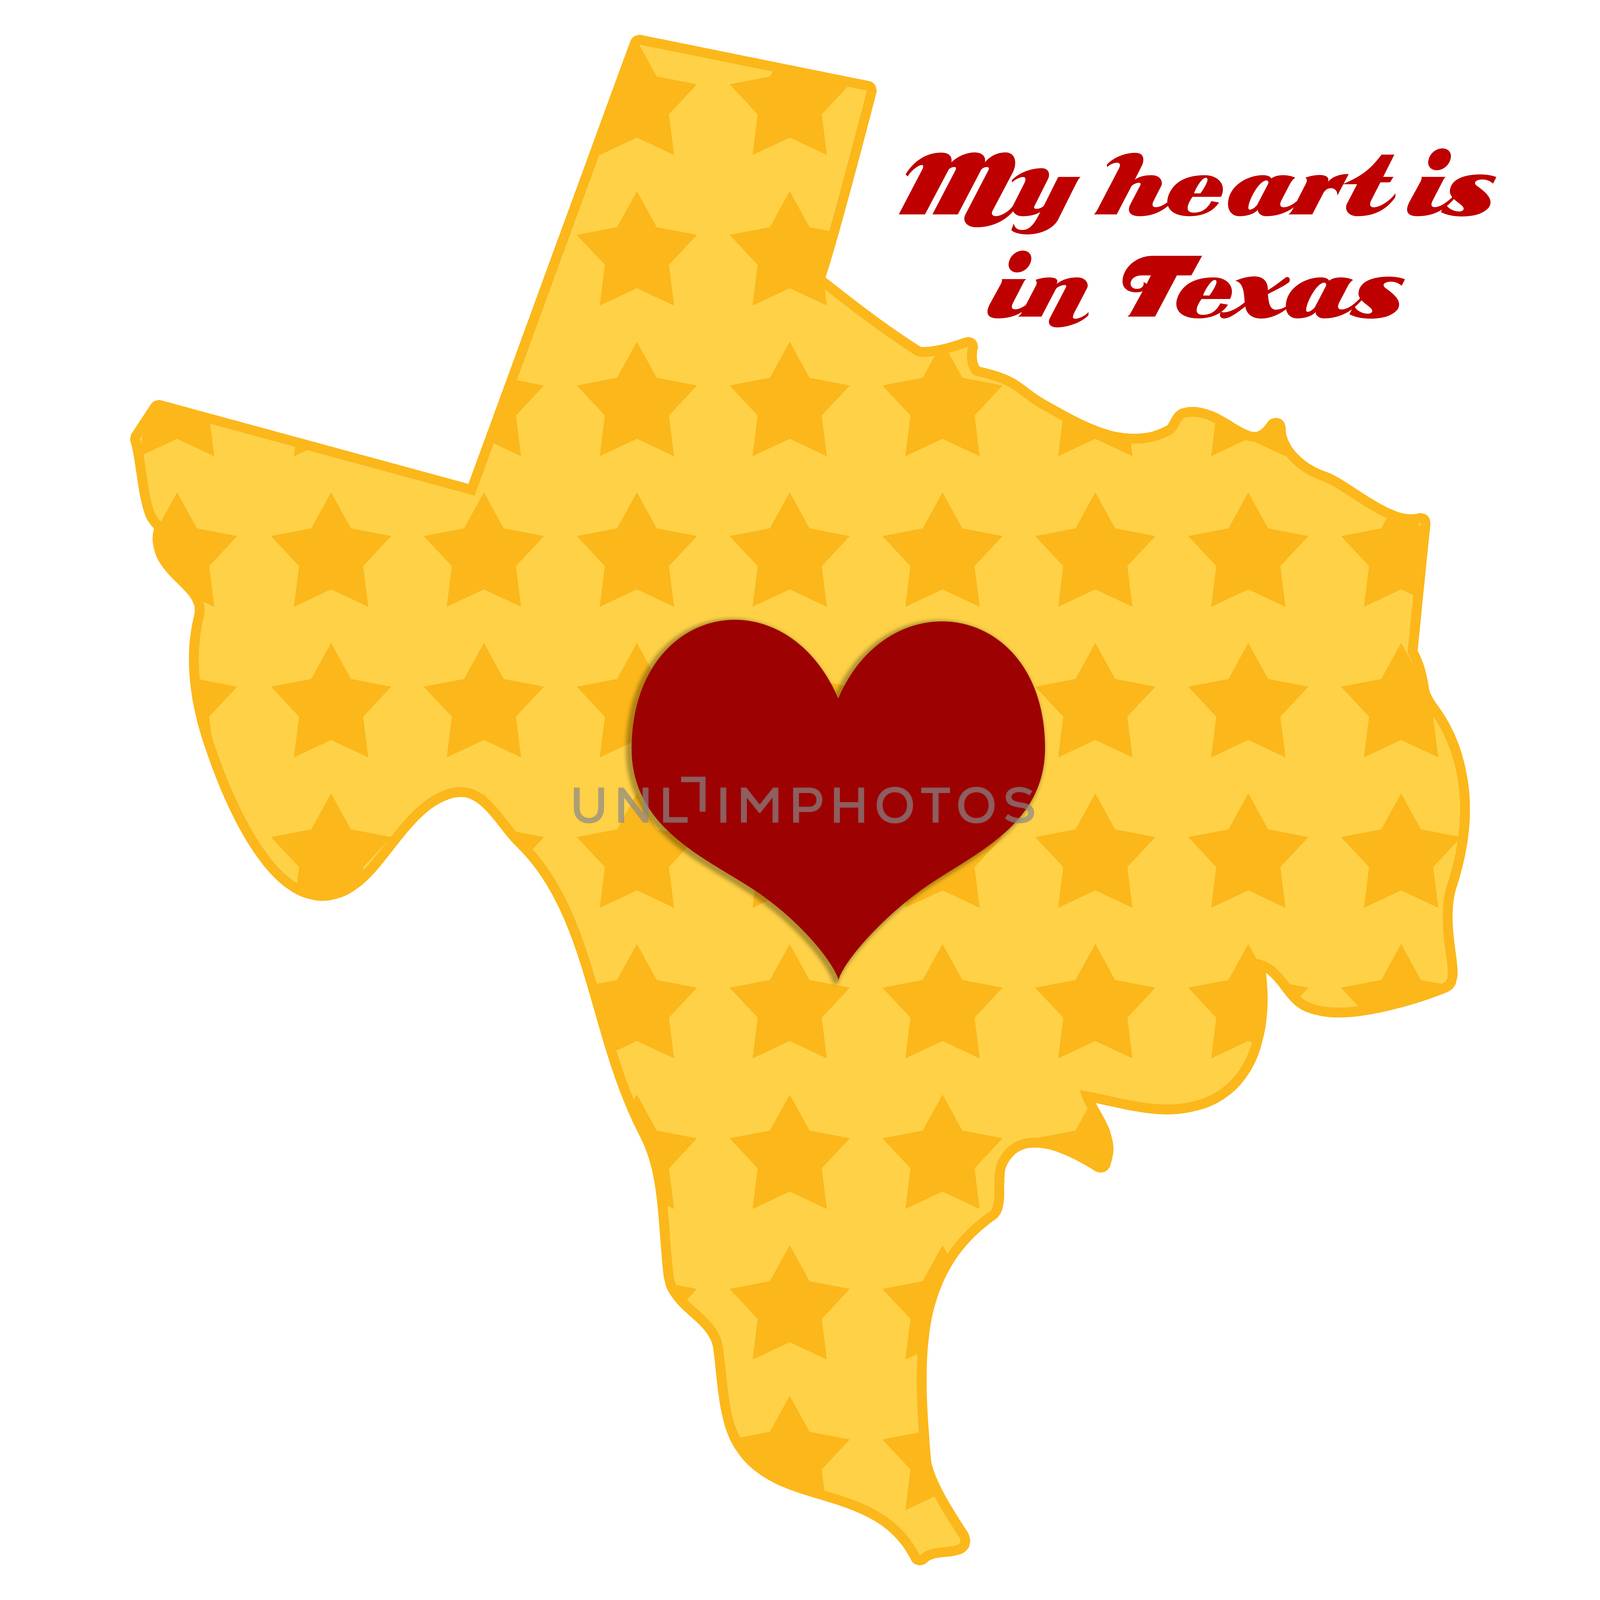 My heart is in Texas